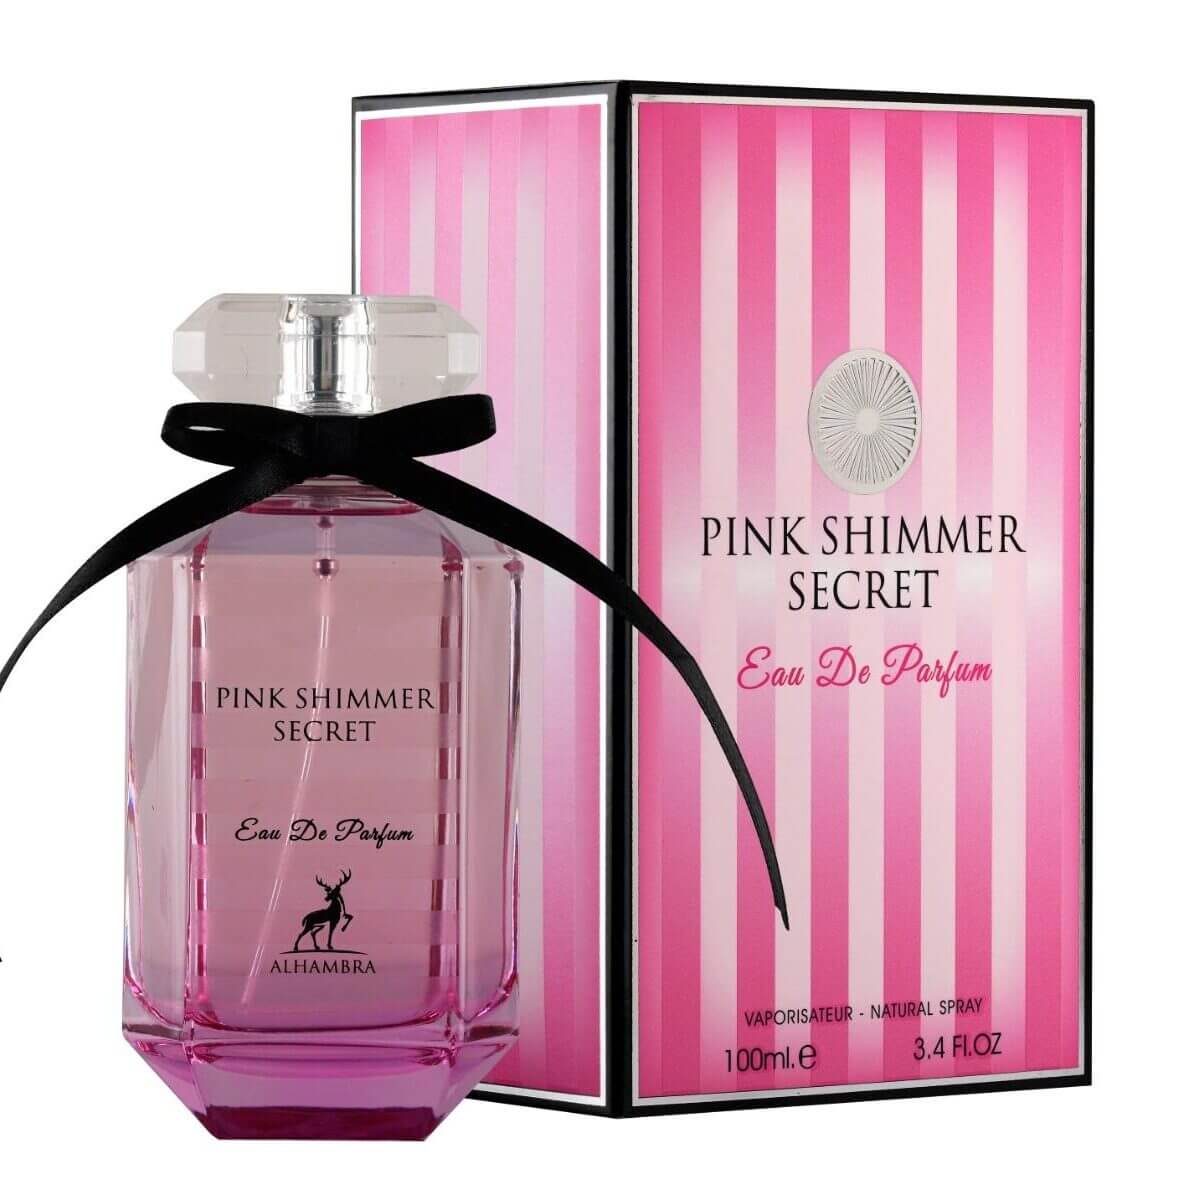 PINK SHIMMER - Eau de Parfum for Women